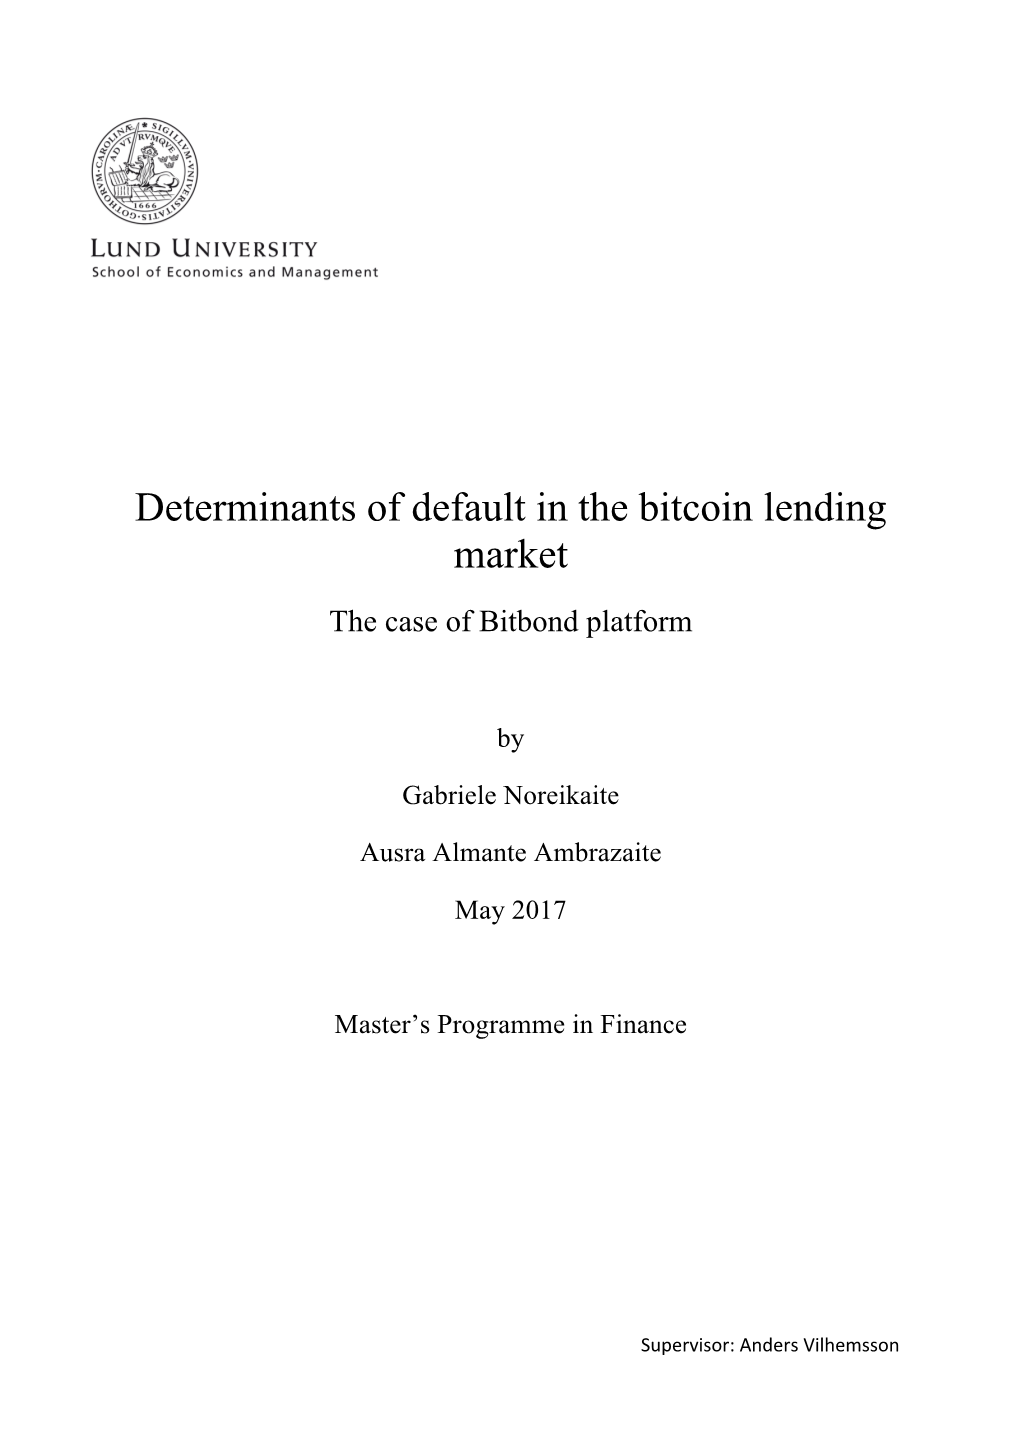 Determinants of Default in the Bitcoin Lending Market the Case of Bitbond Platform